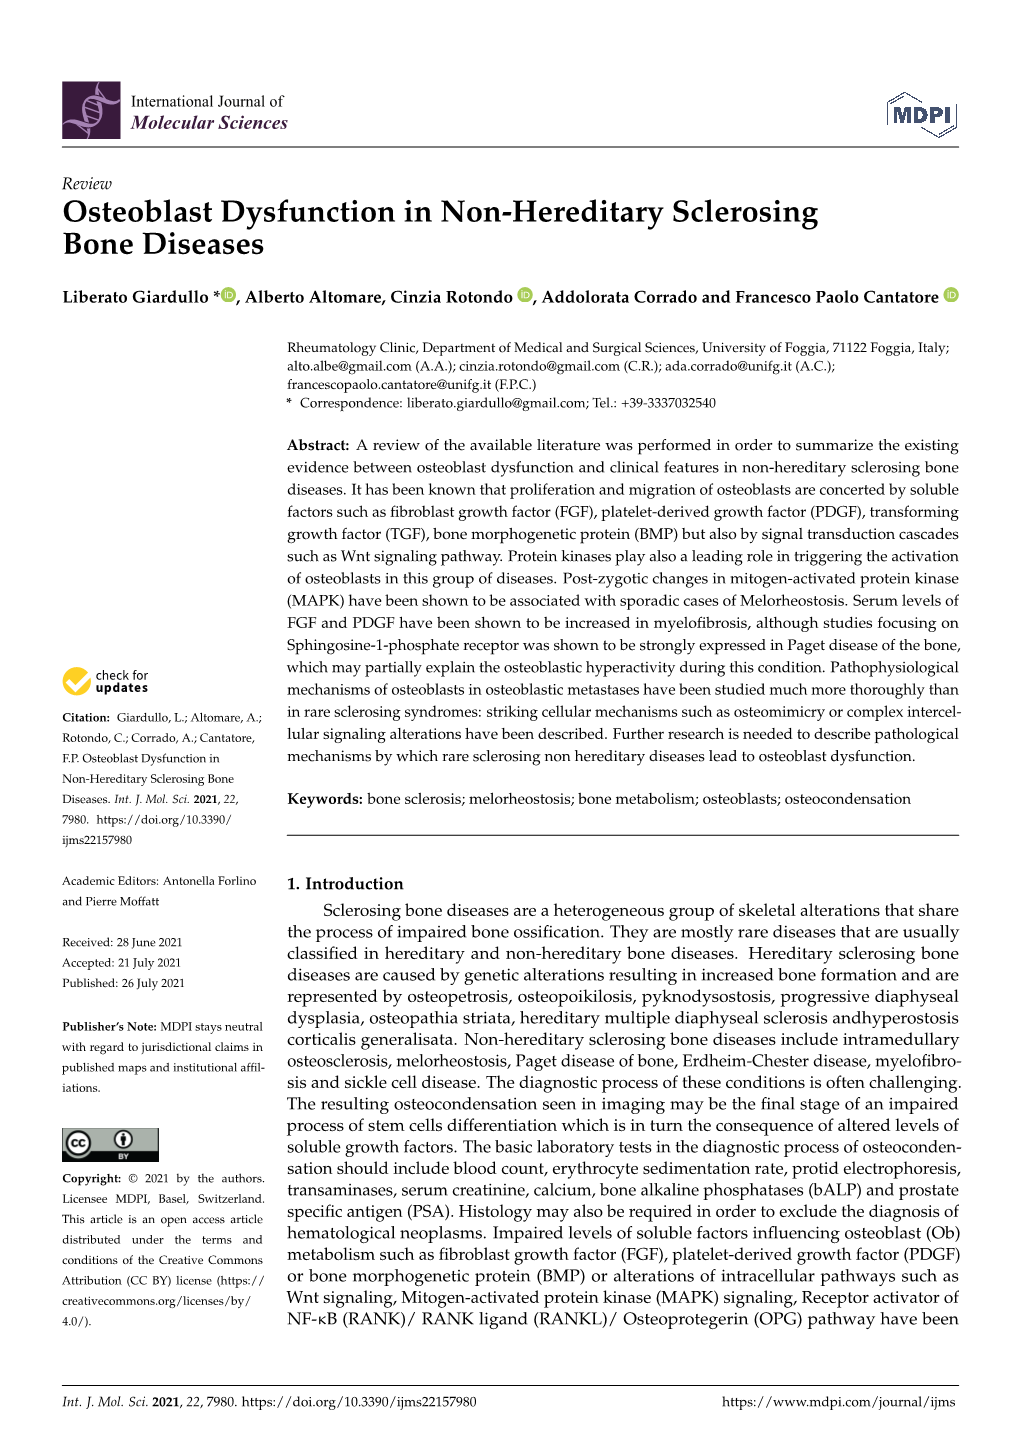 Osteoblast Dysfunction in Non-Hereditary Sclerosing Bone Diseases